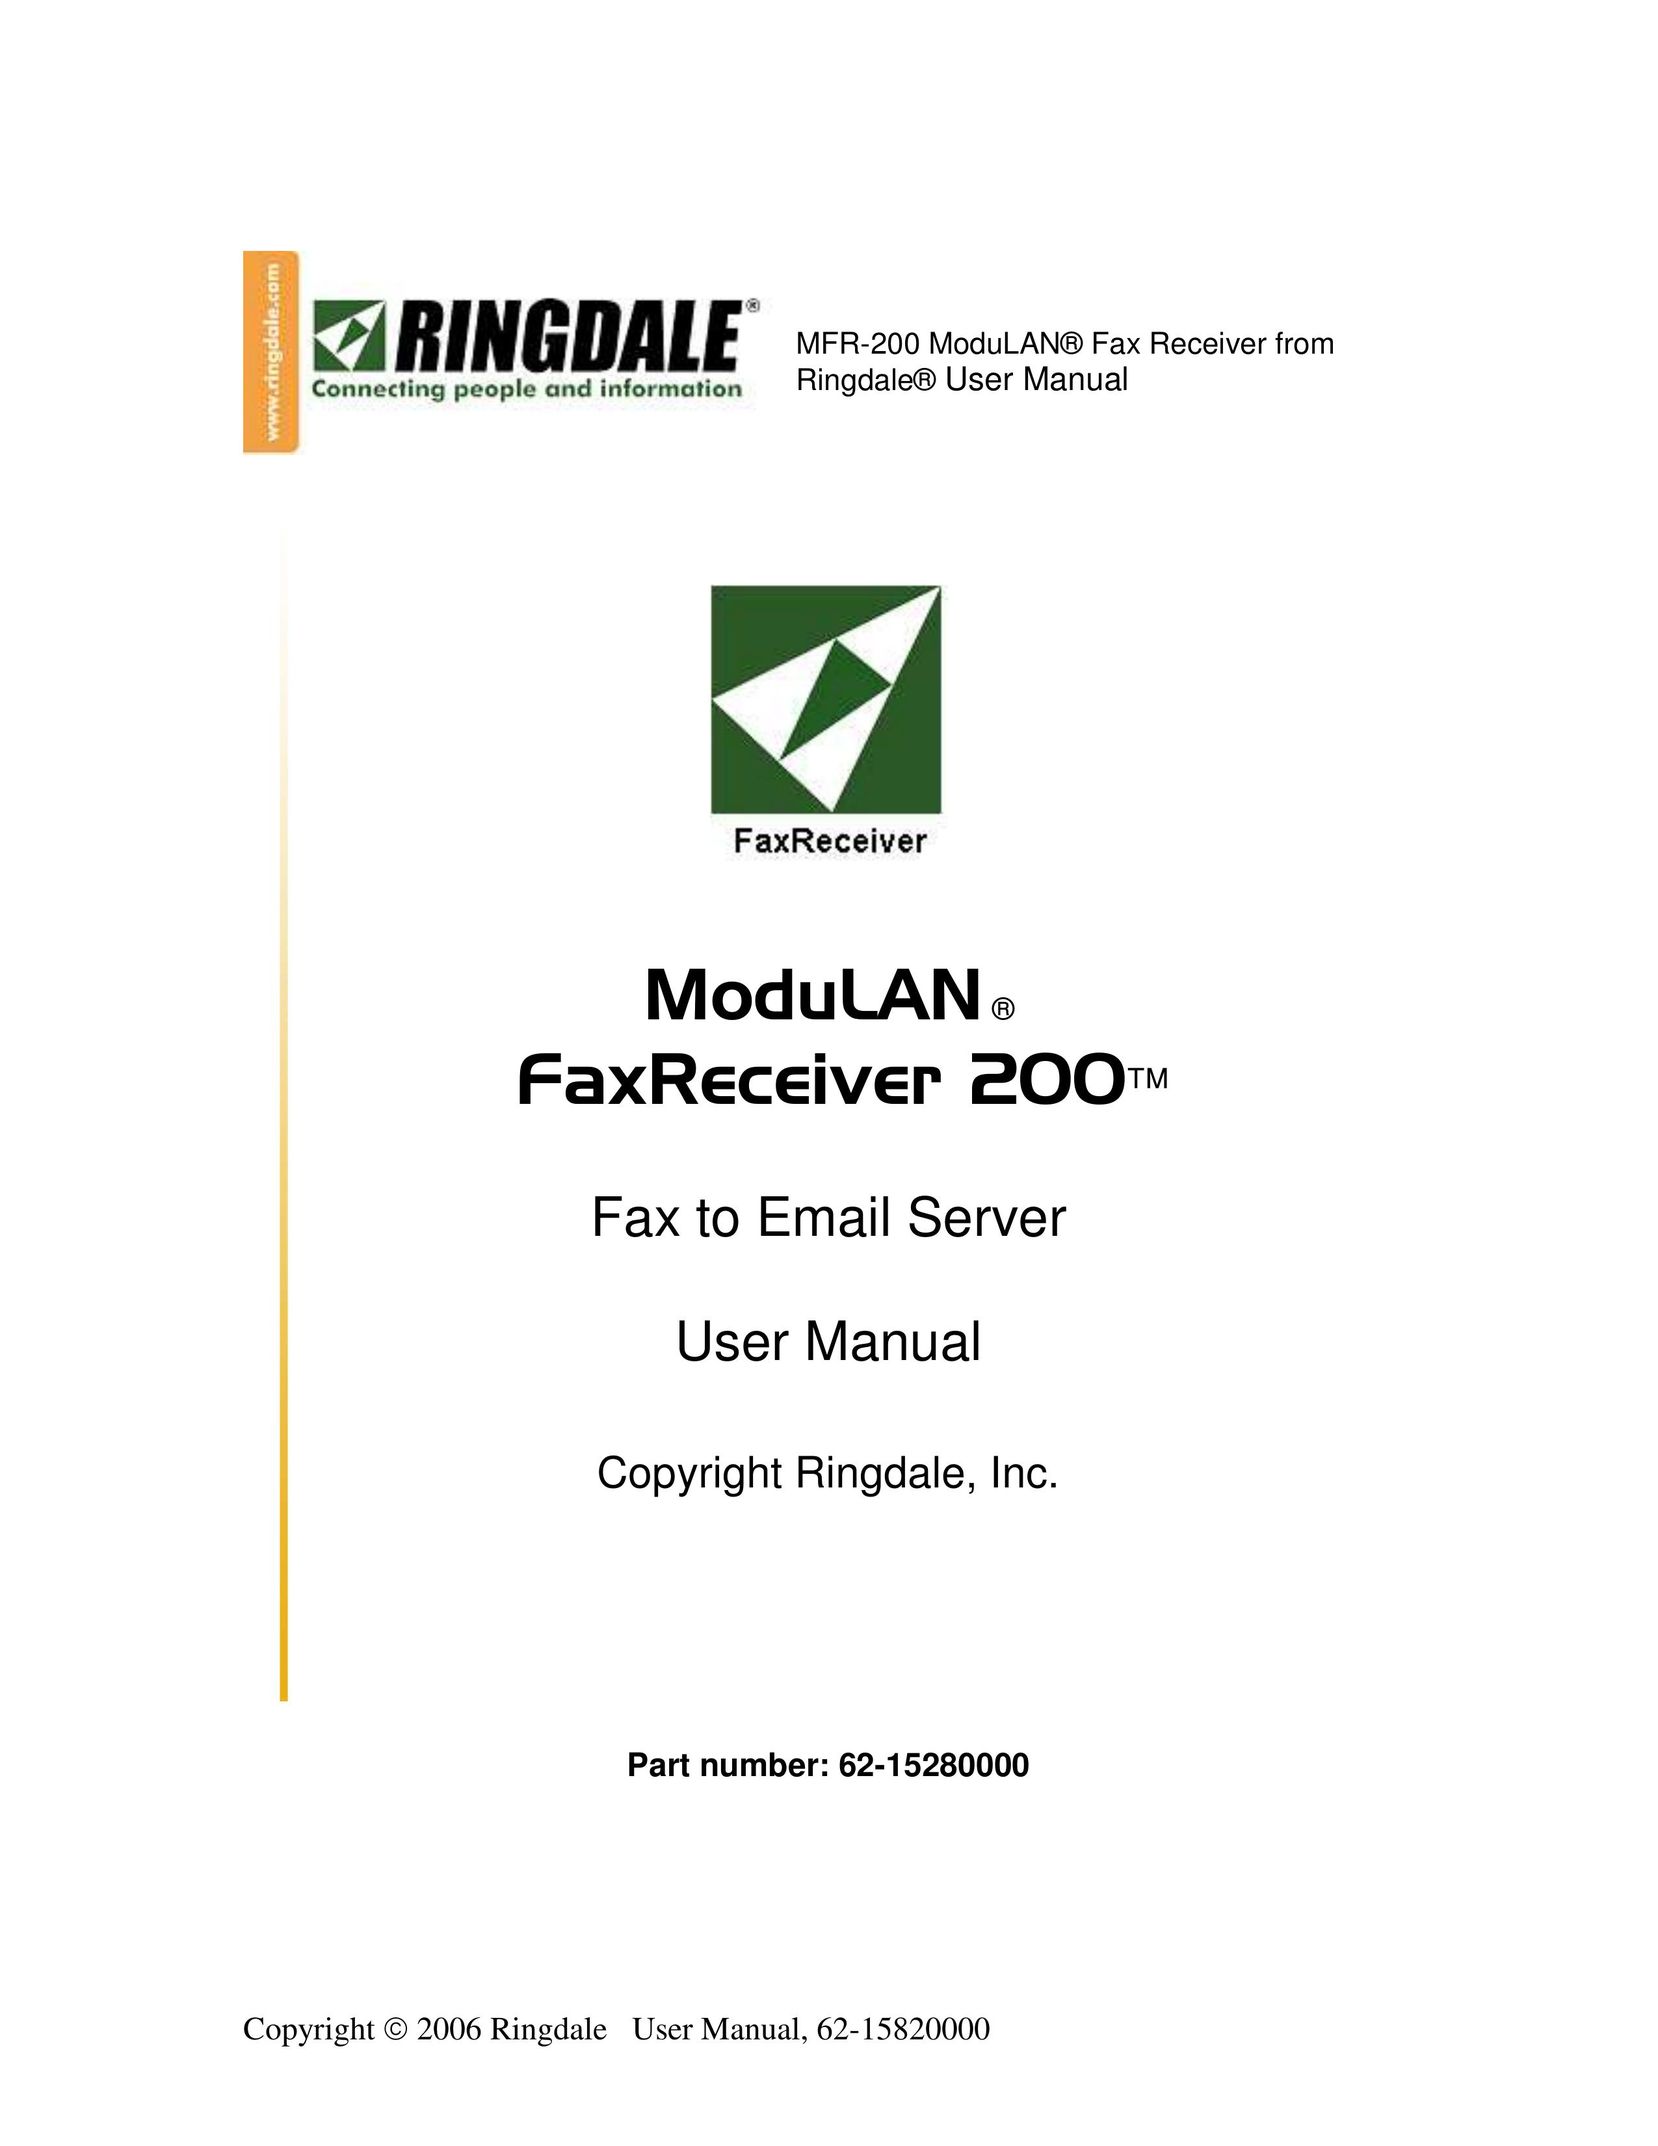 Ringdale MFR-200 Fax Machine User Manual